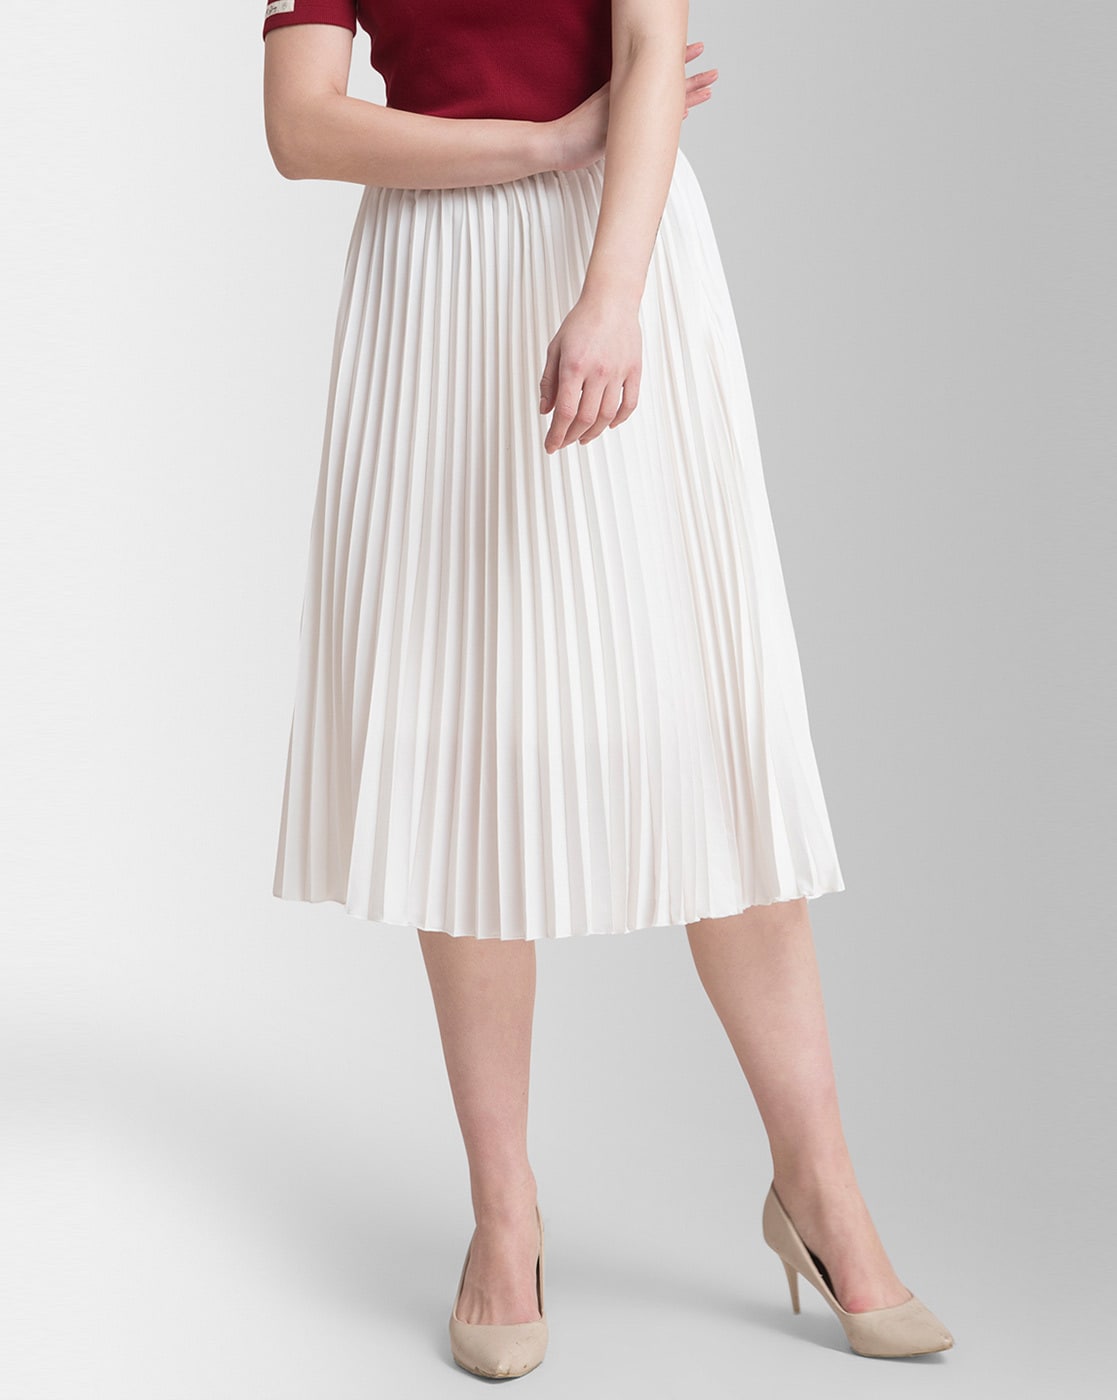 Asymmetrical Skirts - White - women - 90 products | FASHIOLA.com-suu.vn